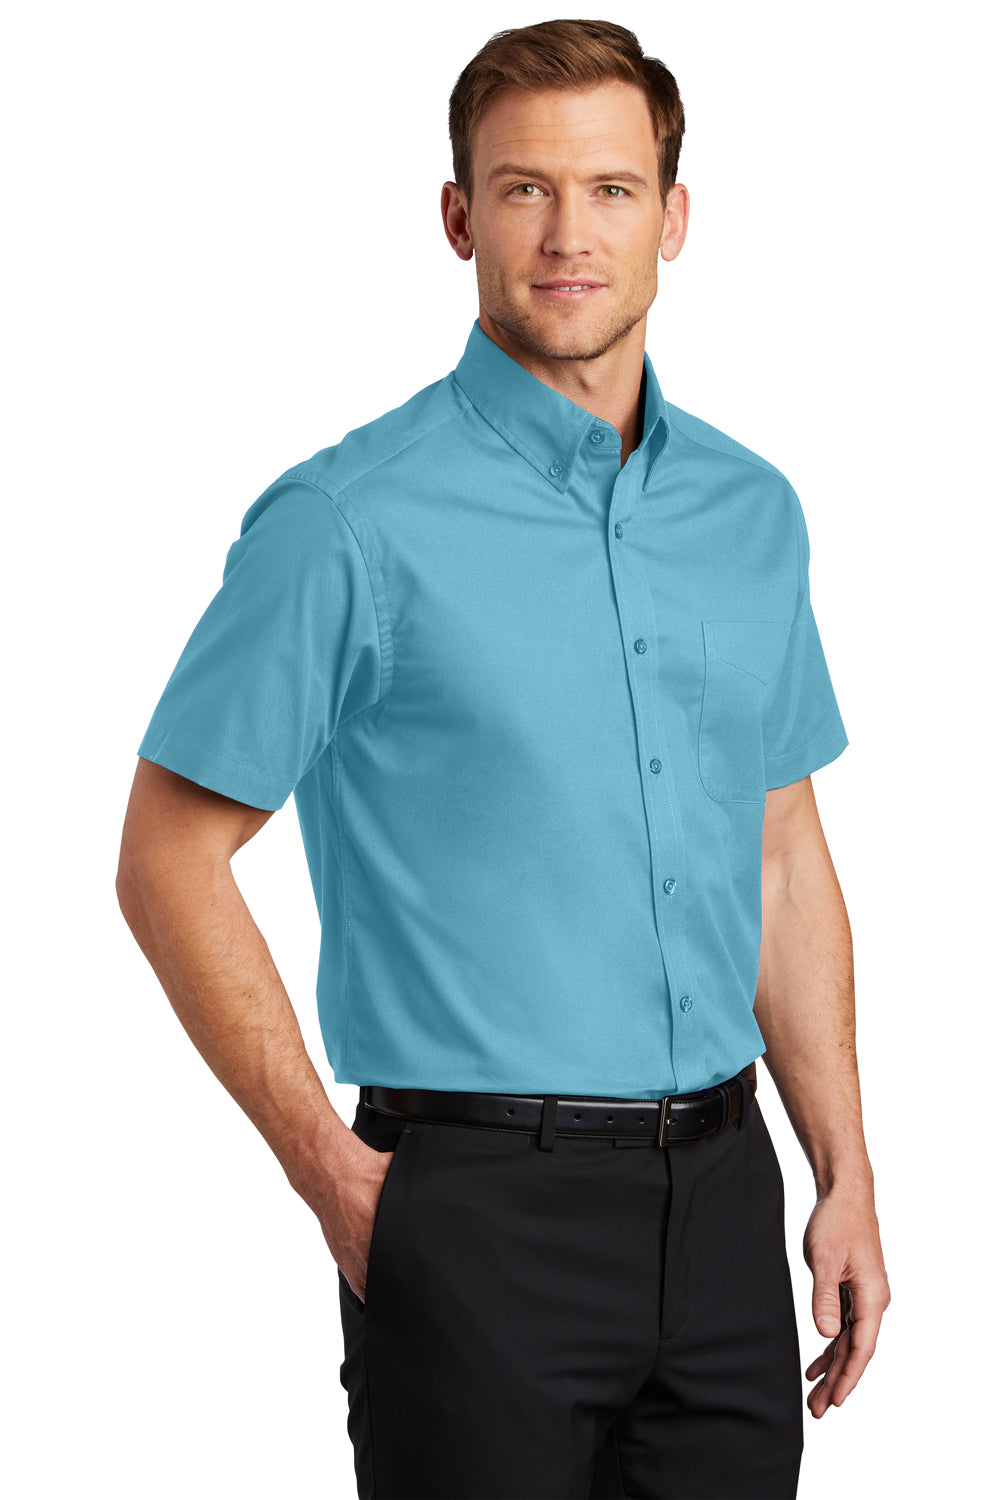 Port Authority S508/TLS508 Mens Easy Care Wrinkle Resistant Short Sleeve Button Down Shirt w/ Pocket Maui Blue 3Q